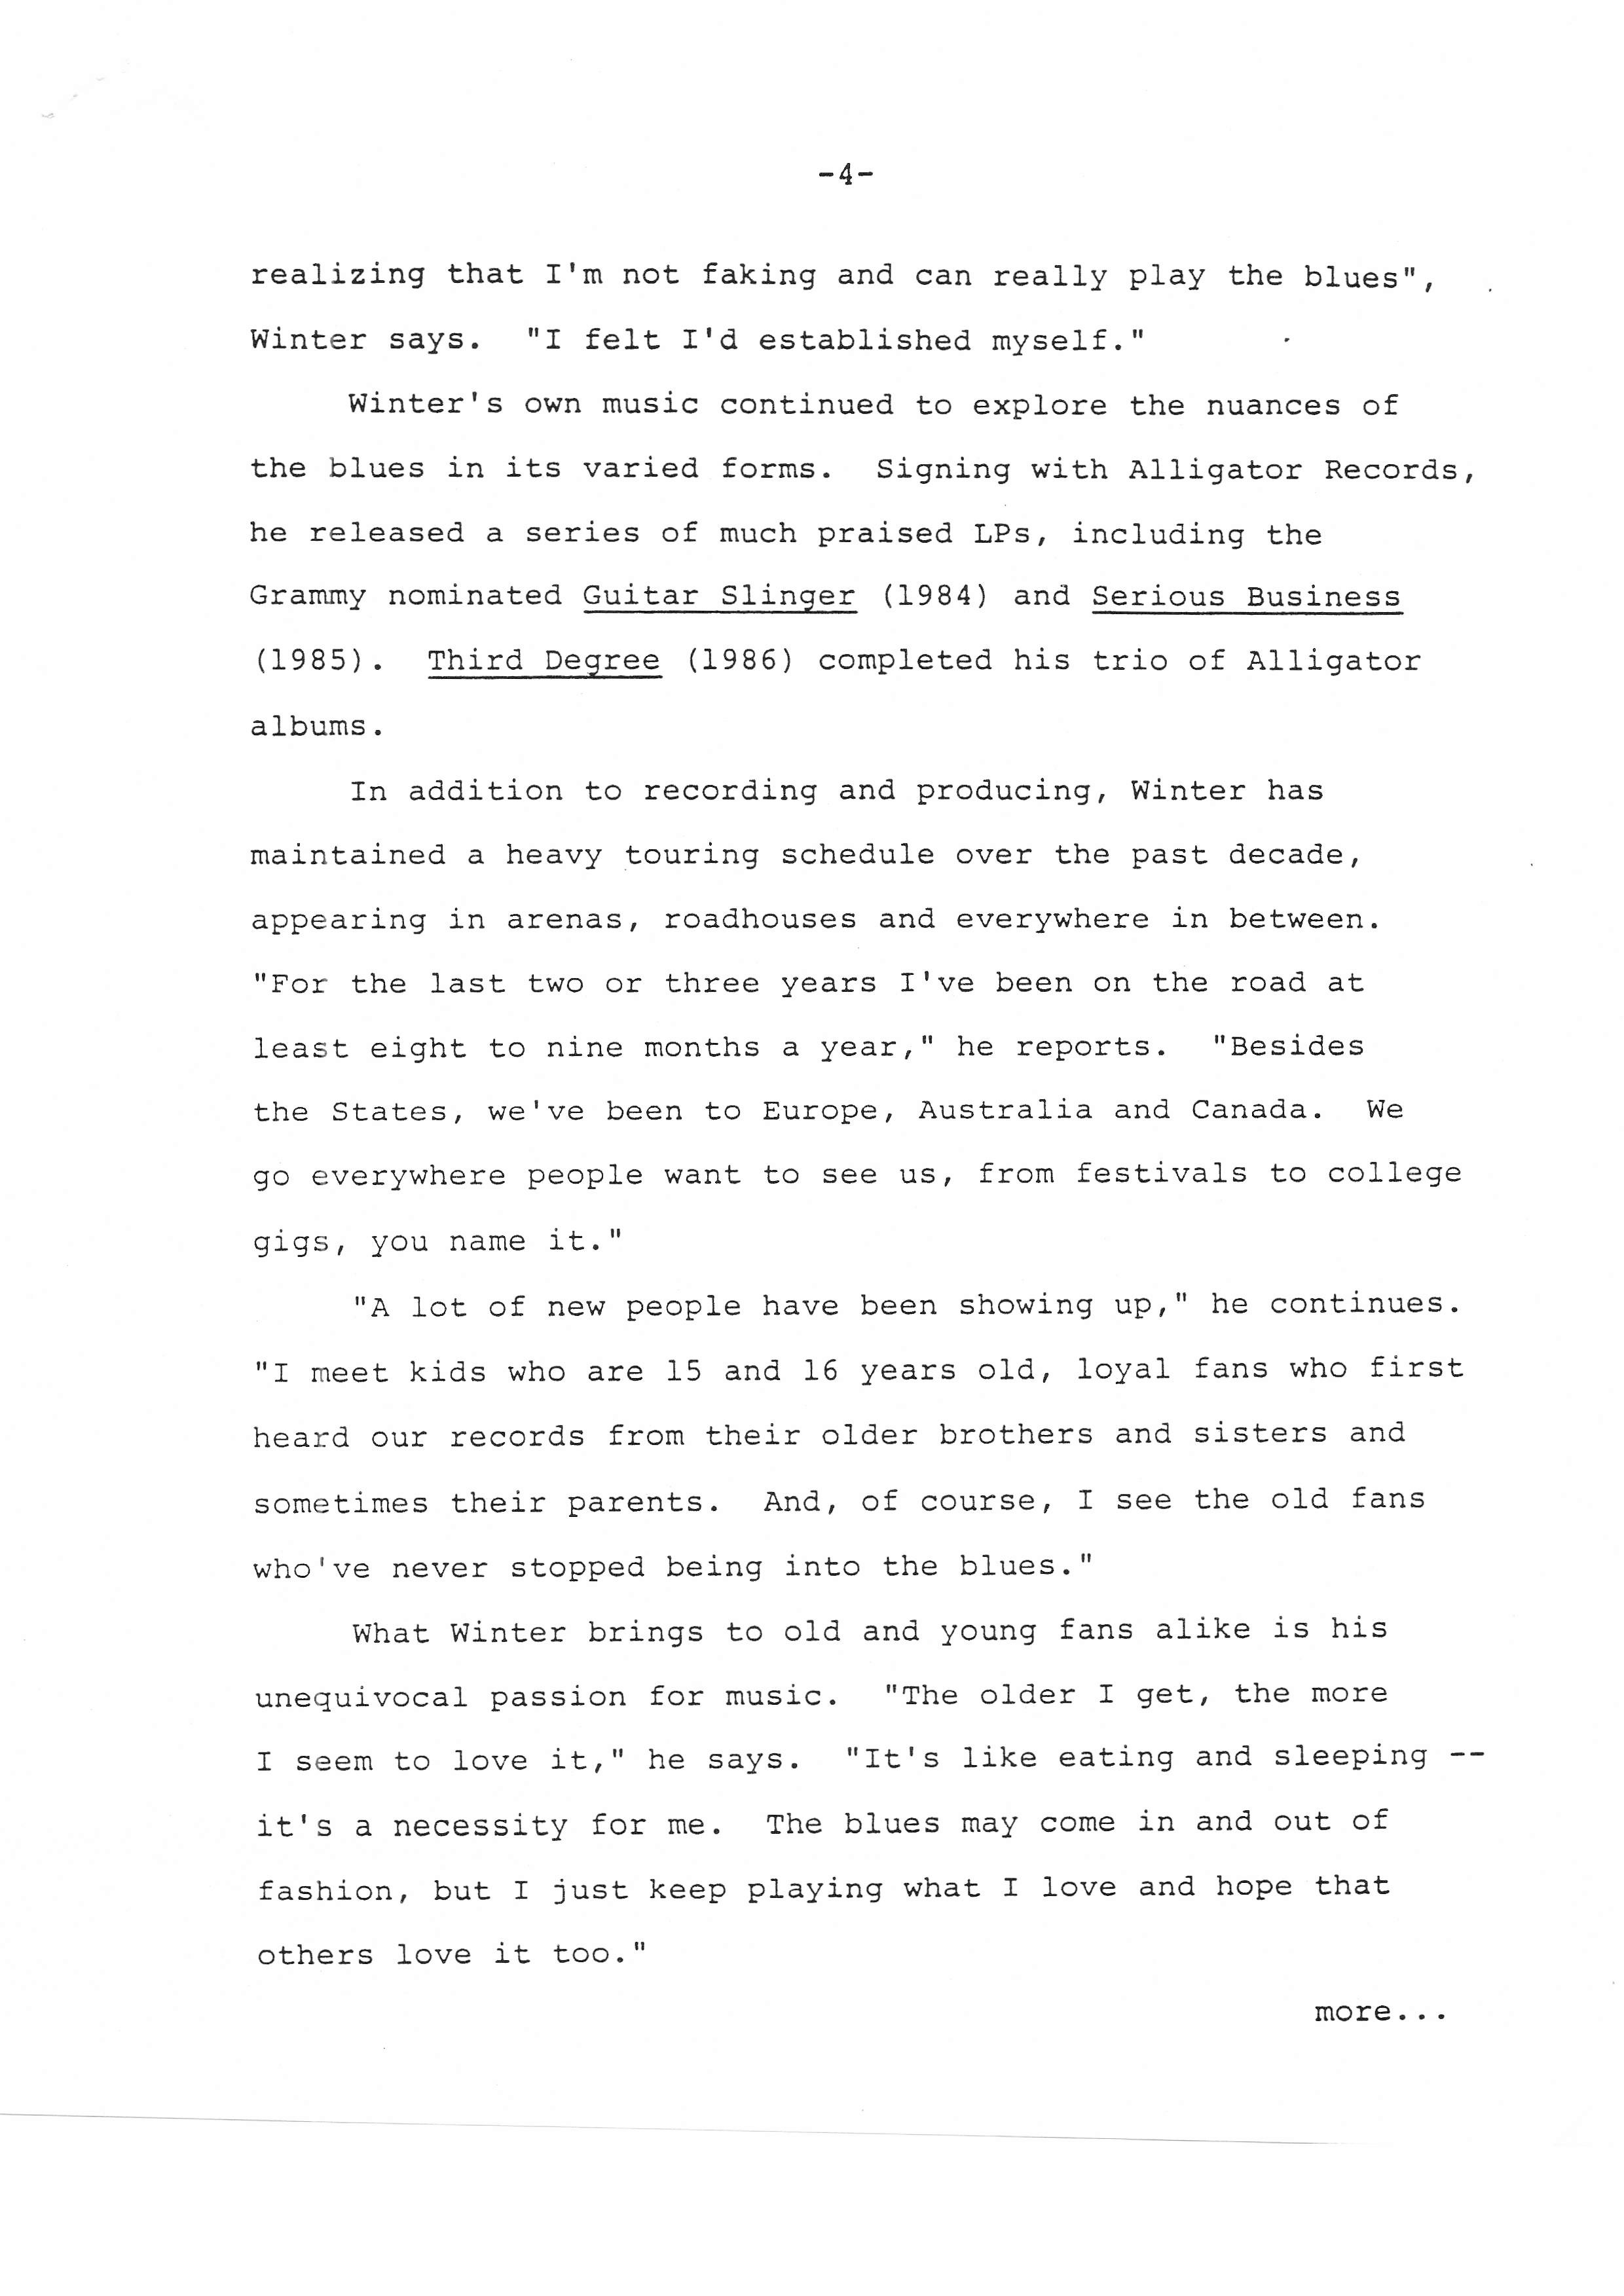 Press release of "Winter of '88" incl Johnny Winter career description, by Slatus Management Part IV/V